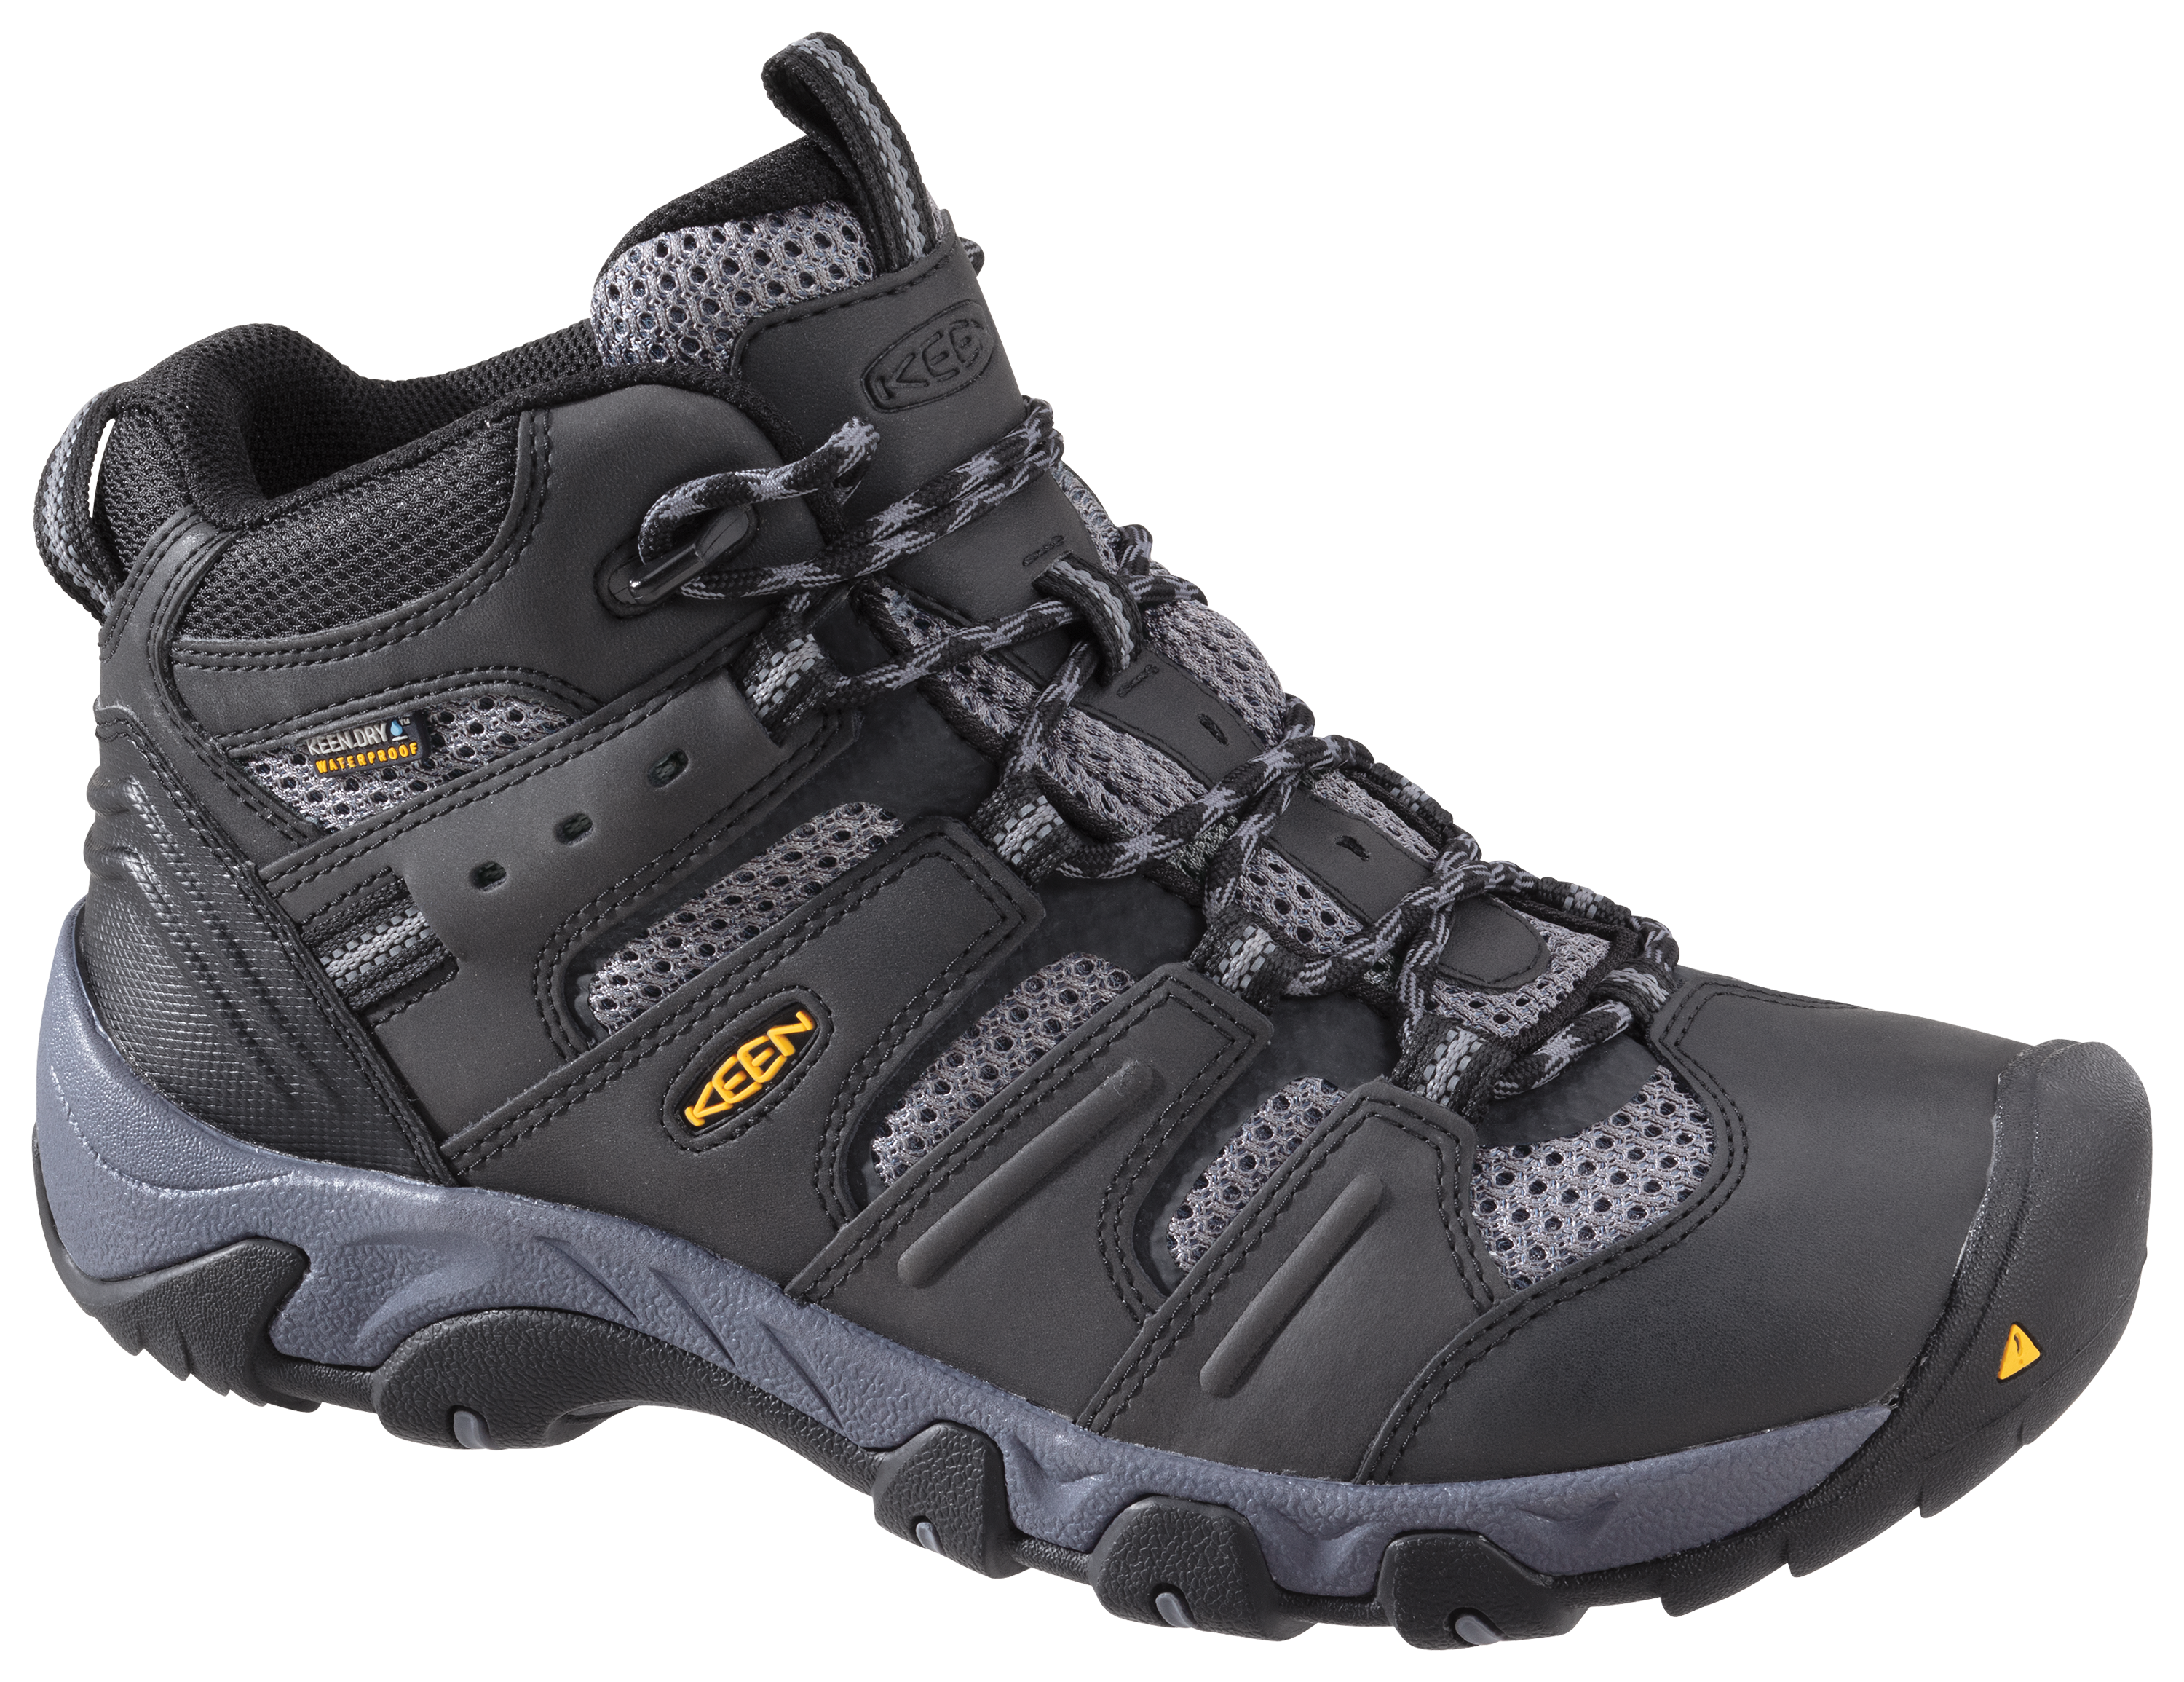 KEEN Koven Mid Waterproof Hiking Boots for Men - Black/Gray - 11.5M